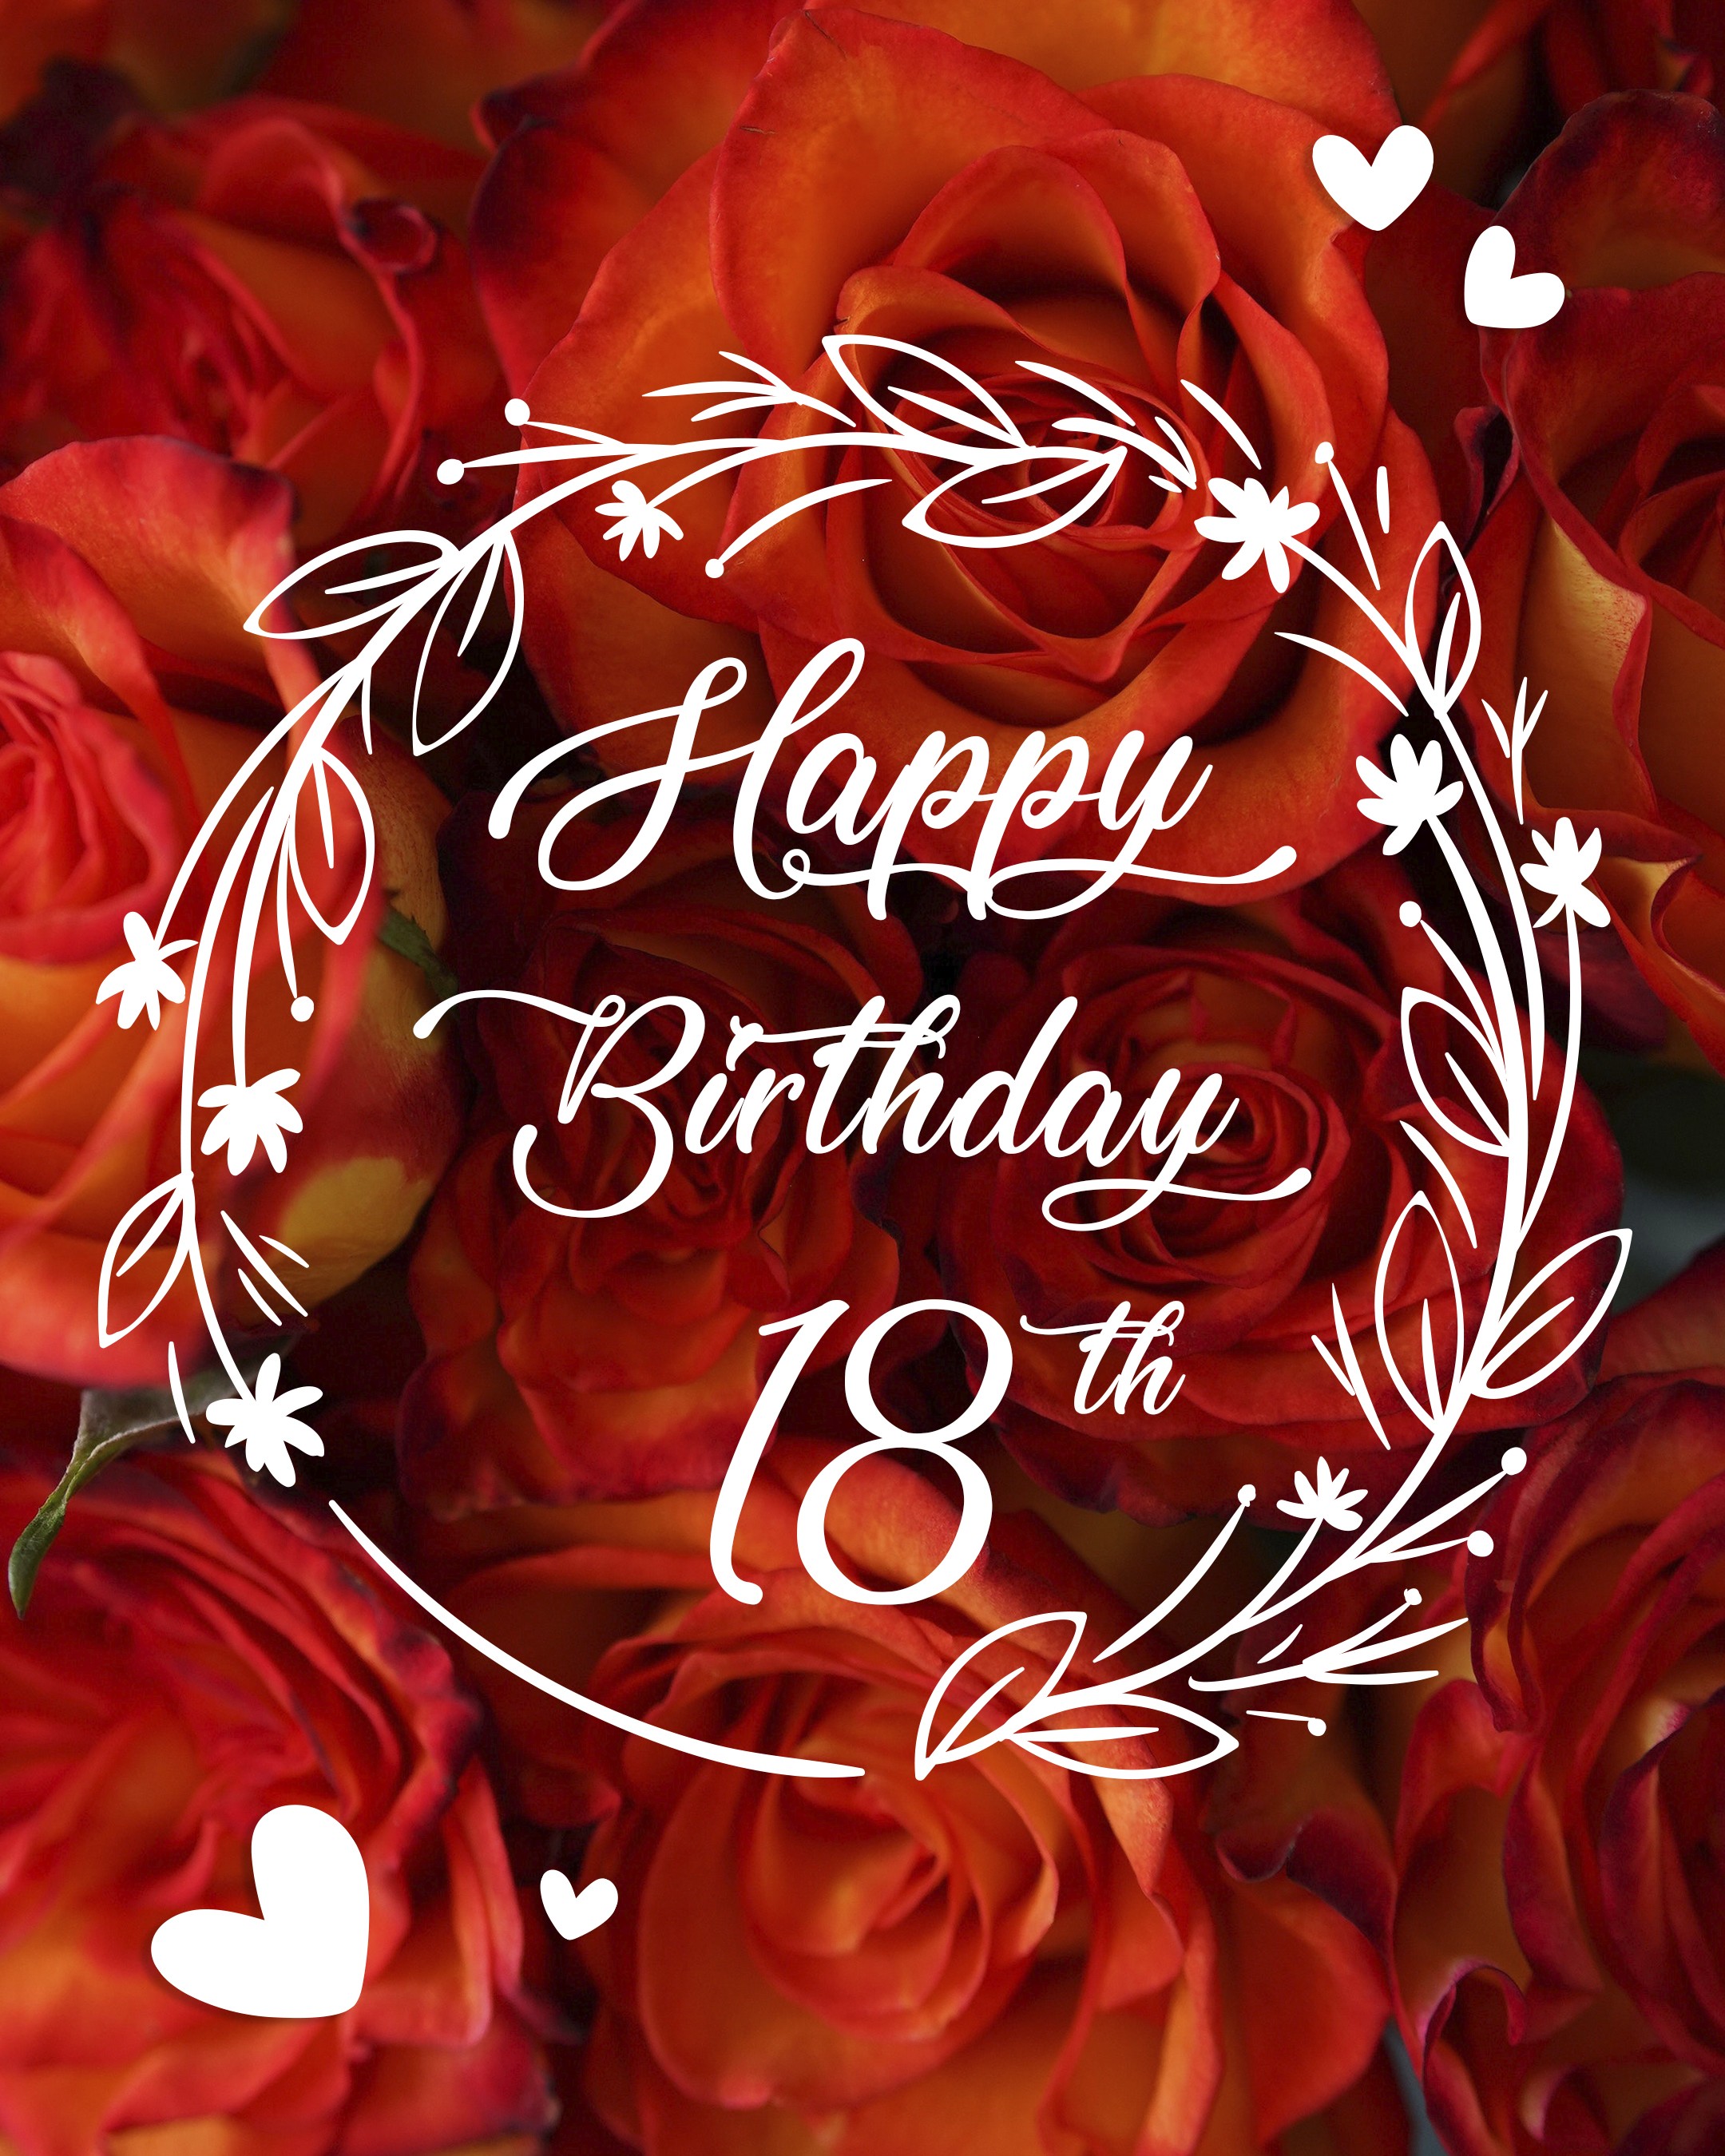 Free 18th Years Happy Birthday Image With Red Flowers - birthdayimg.com